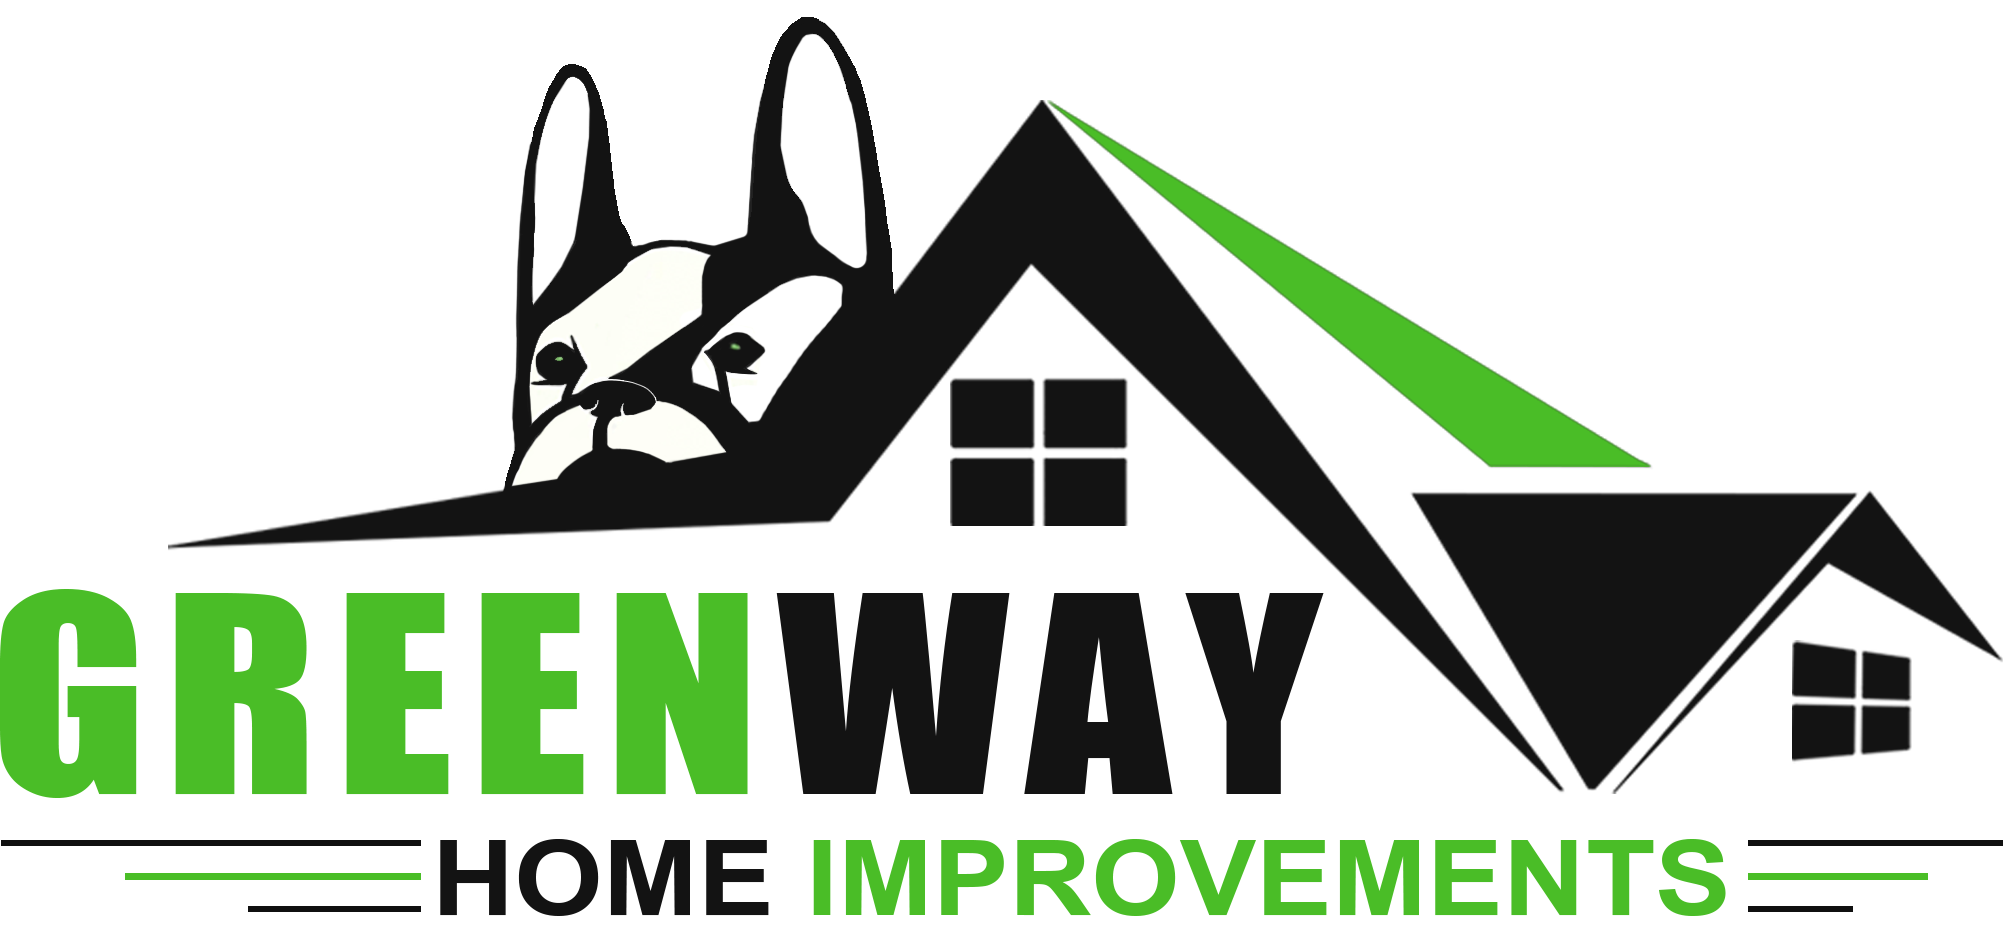 Greenway Home Improvements Logo - Dark 2